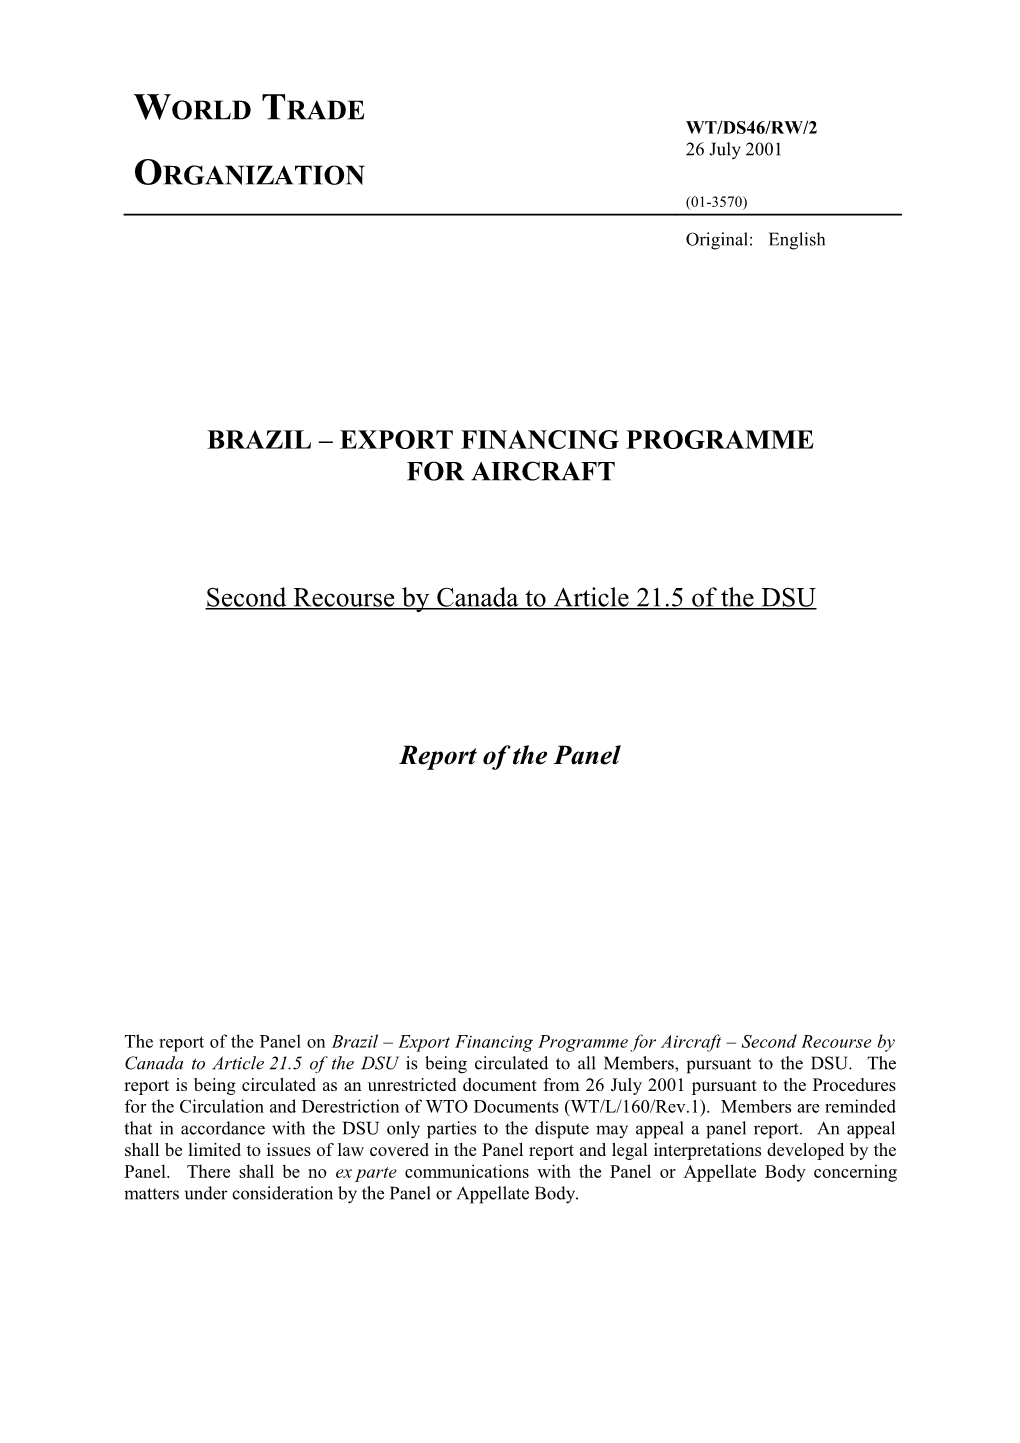 Brazil Export Financing Programme